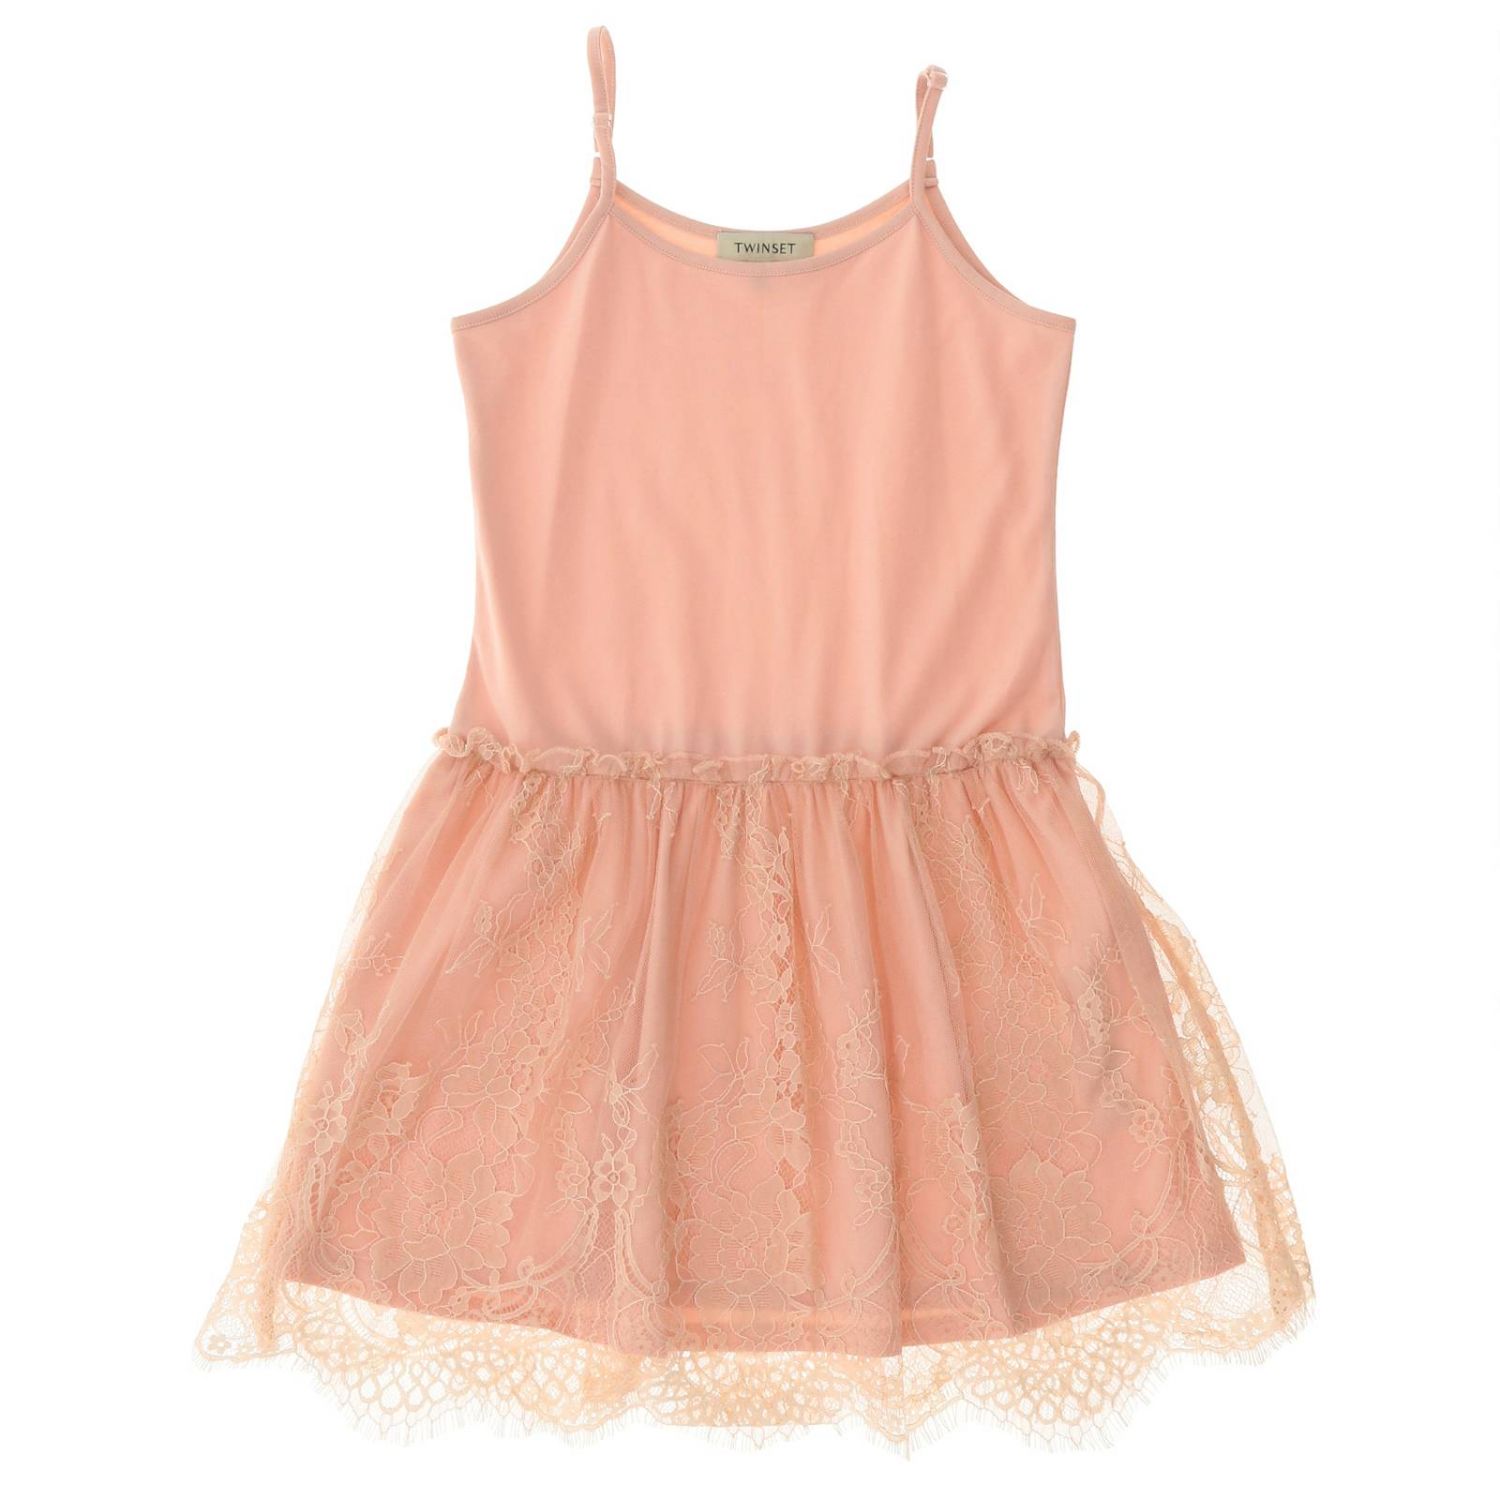 Twin Set Outlet: Dress kids | Dress Twin Set Kids Pink | Dress Twin Set ...